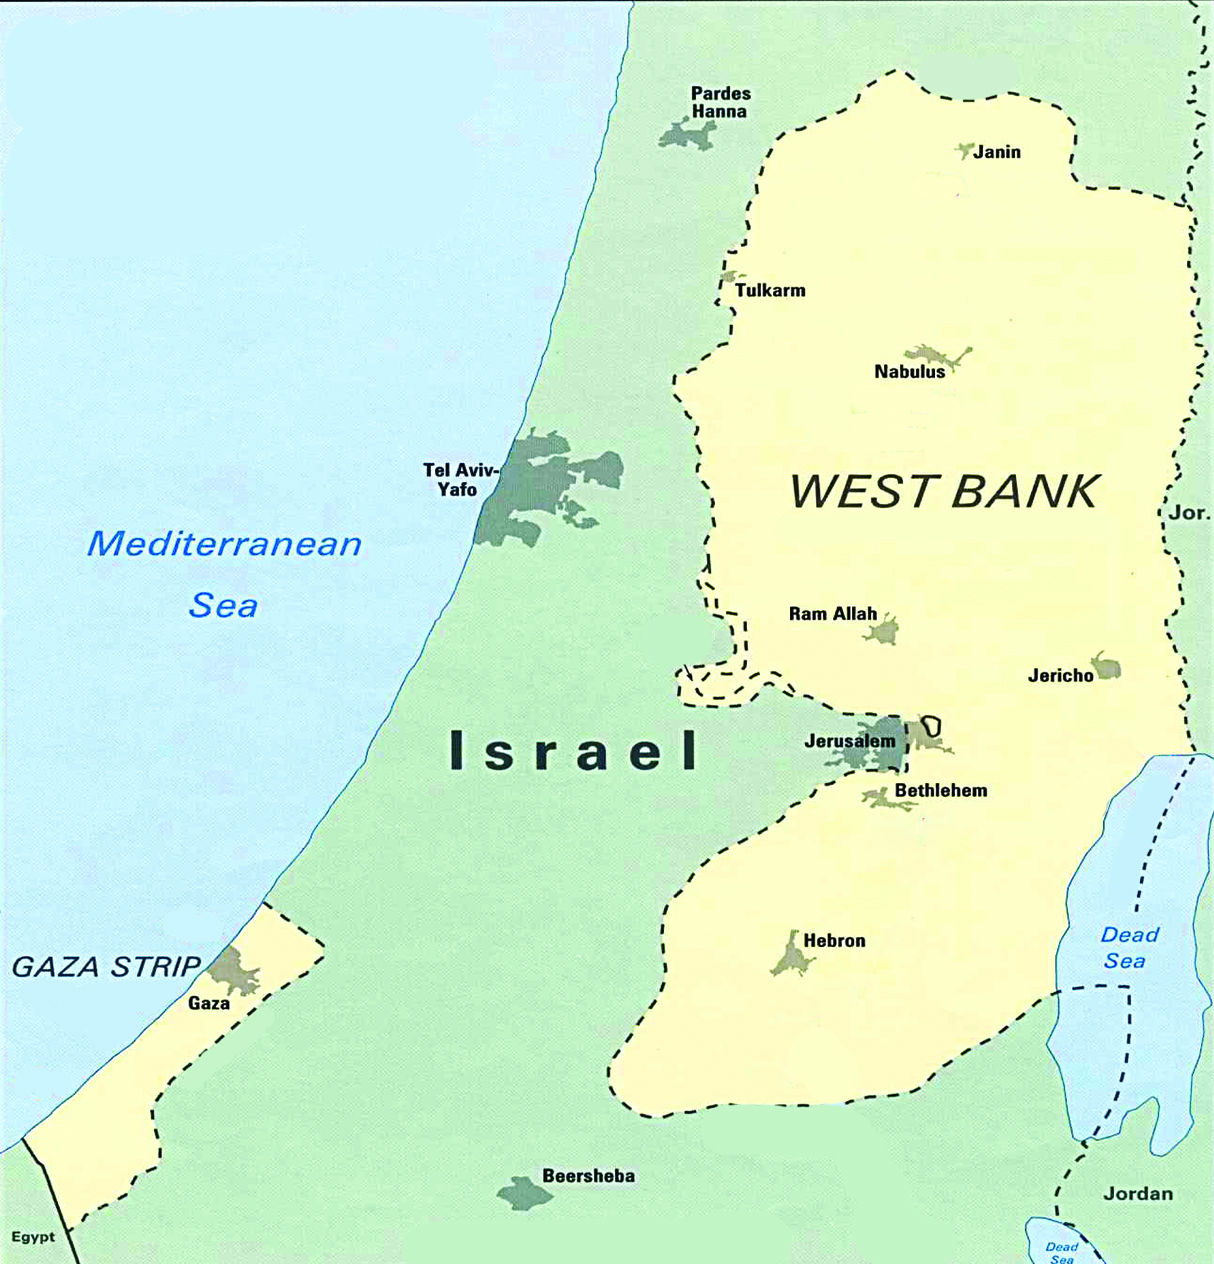 Gaza strip bethany west bank